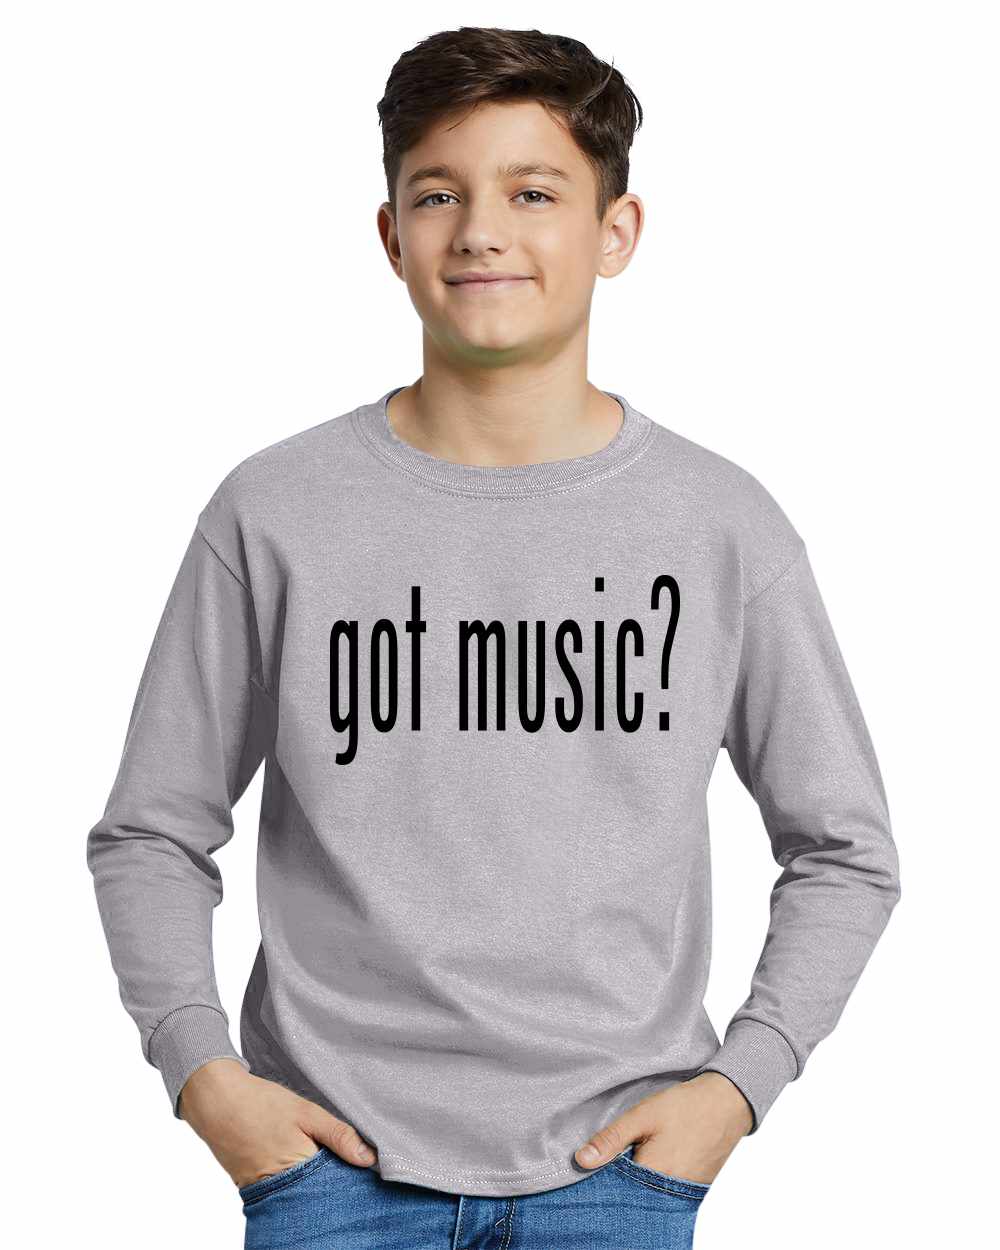 Got Music? on Youth Long Sleeve Shirt